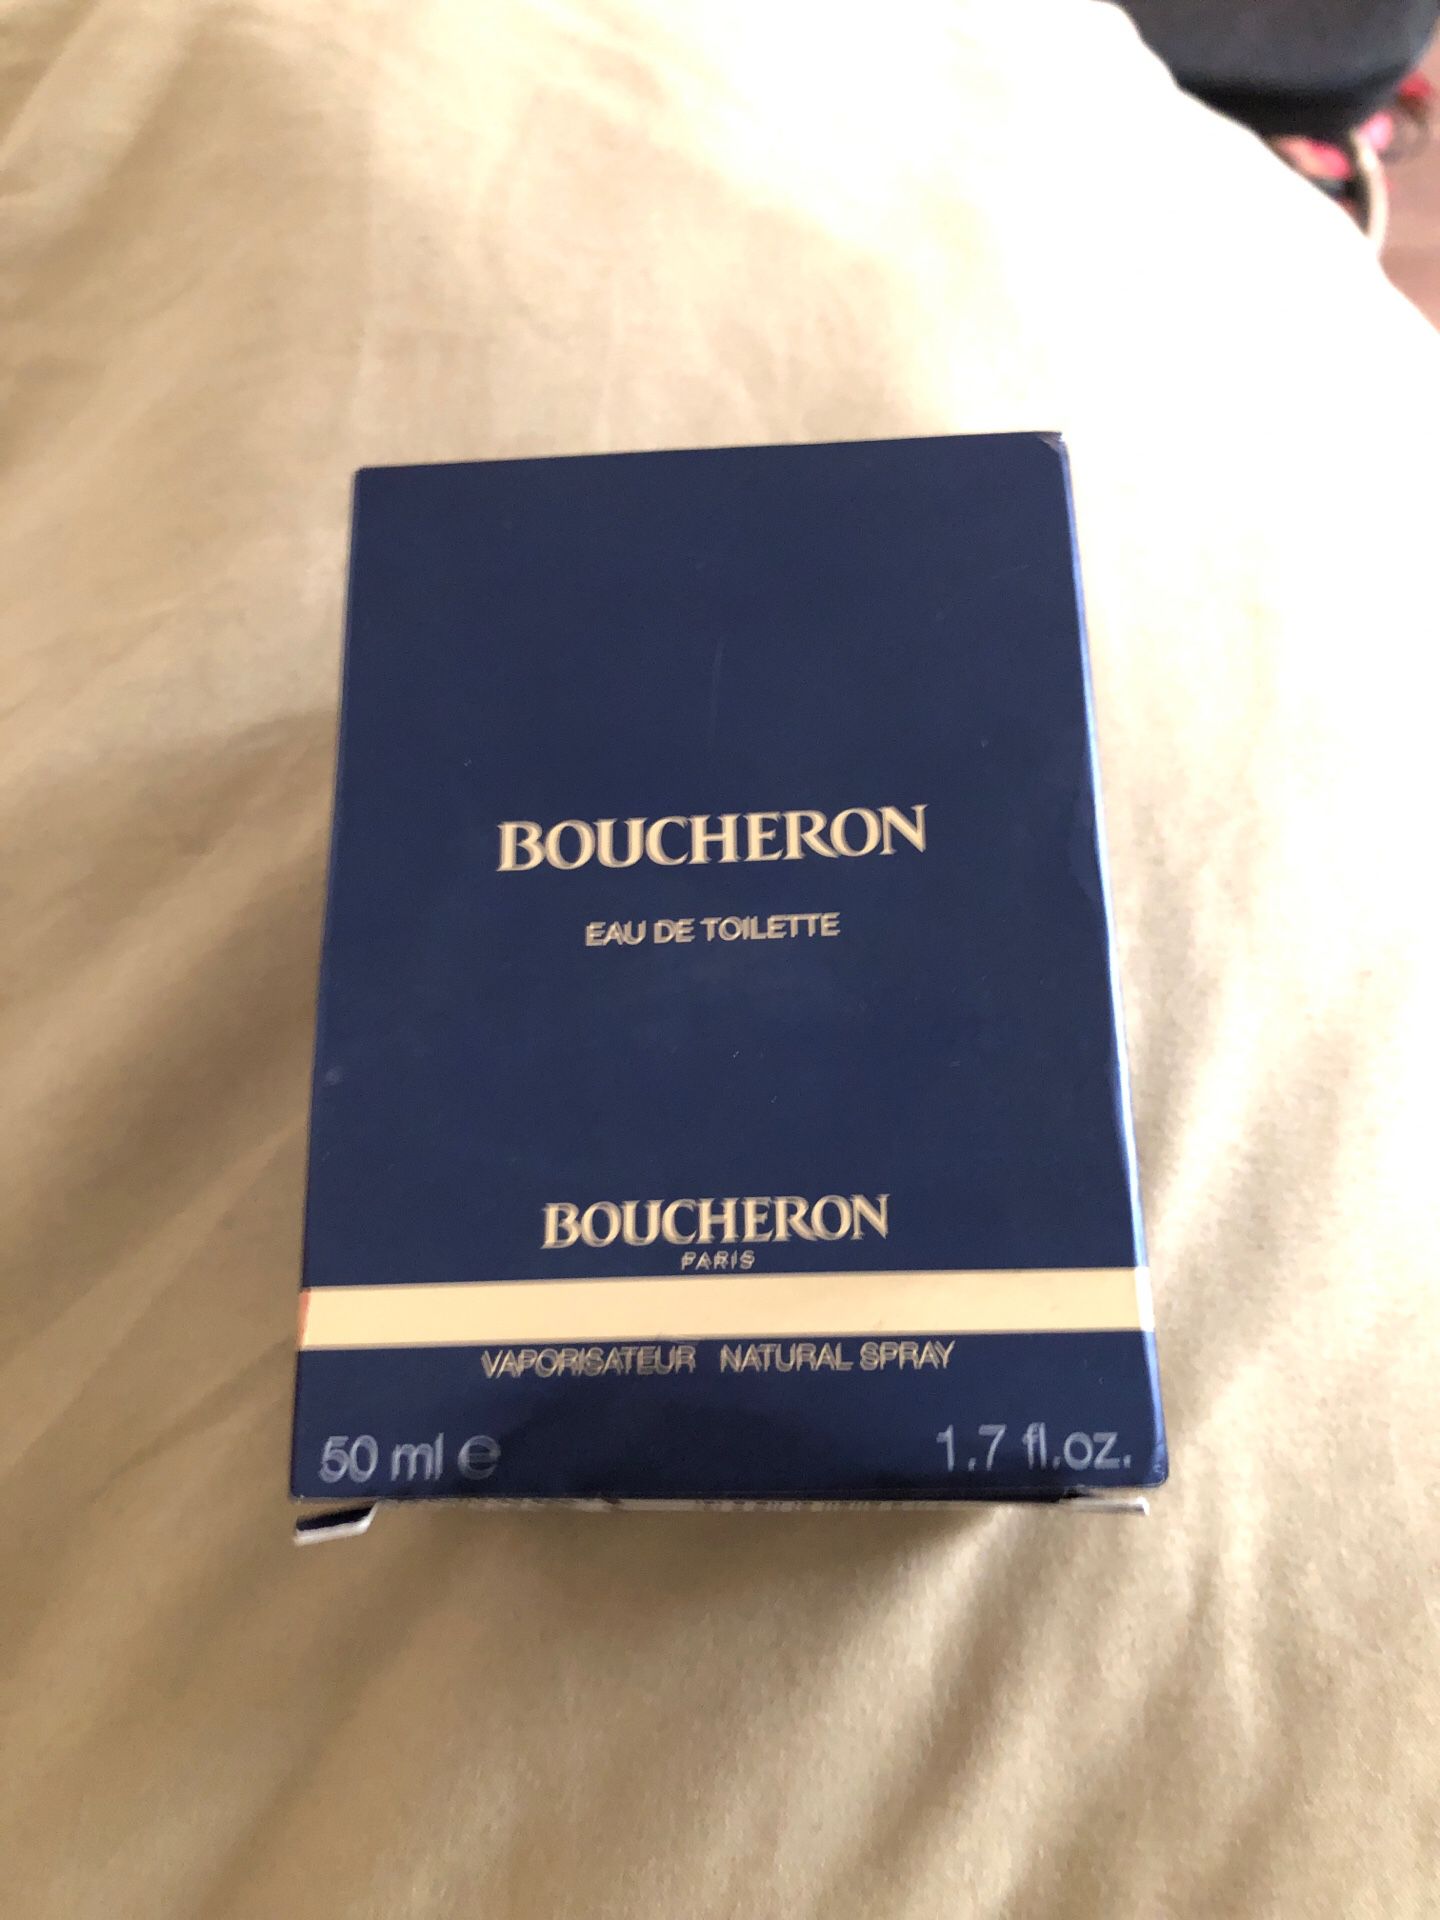 Boucheron perfume